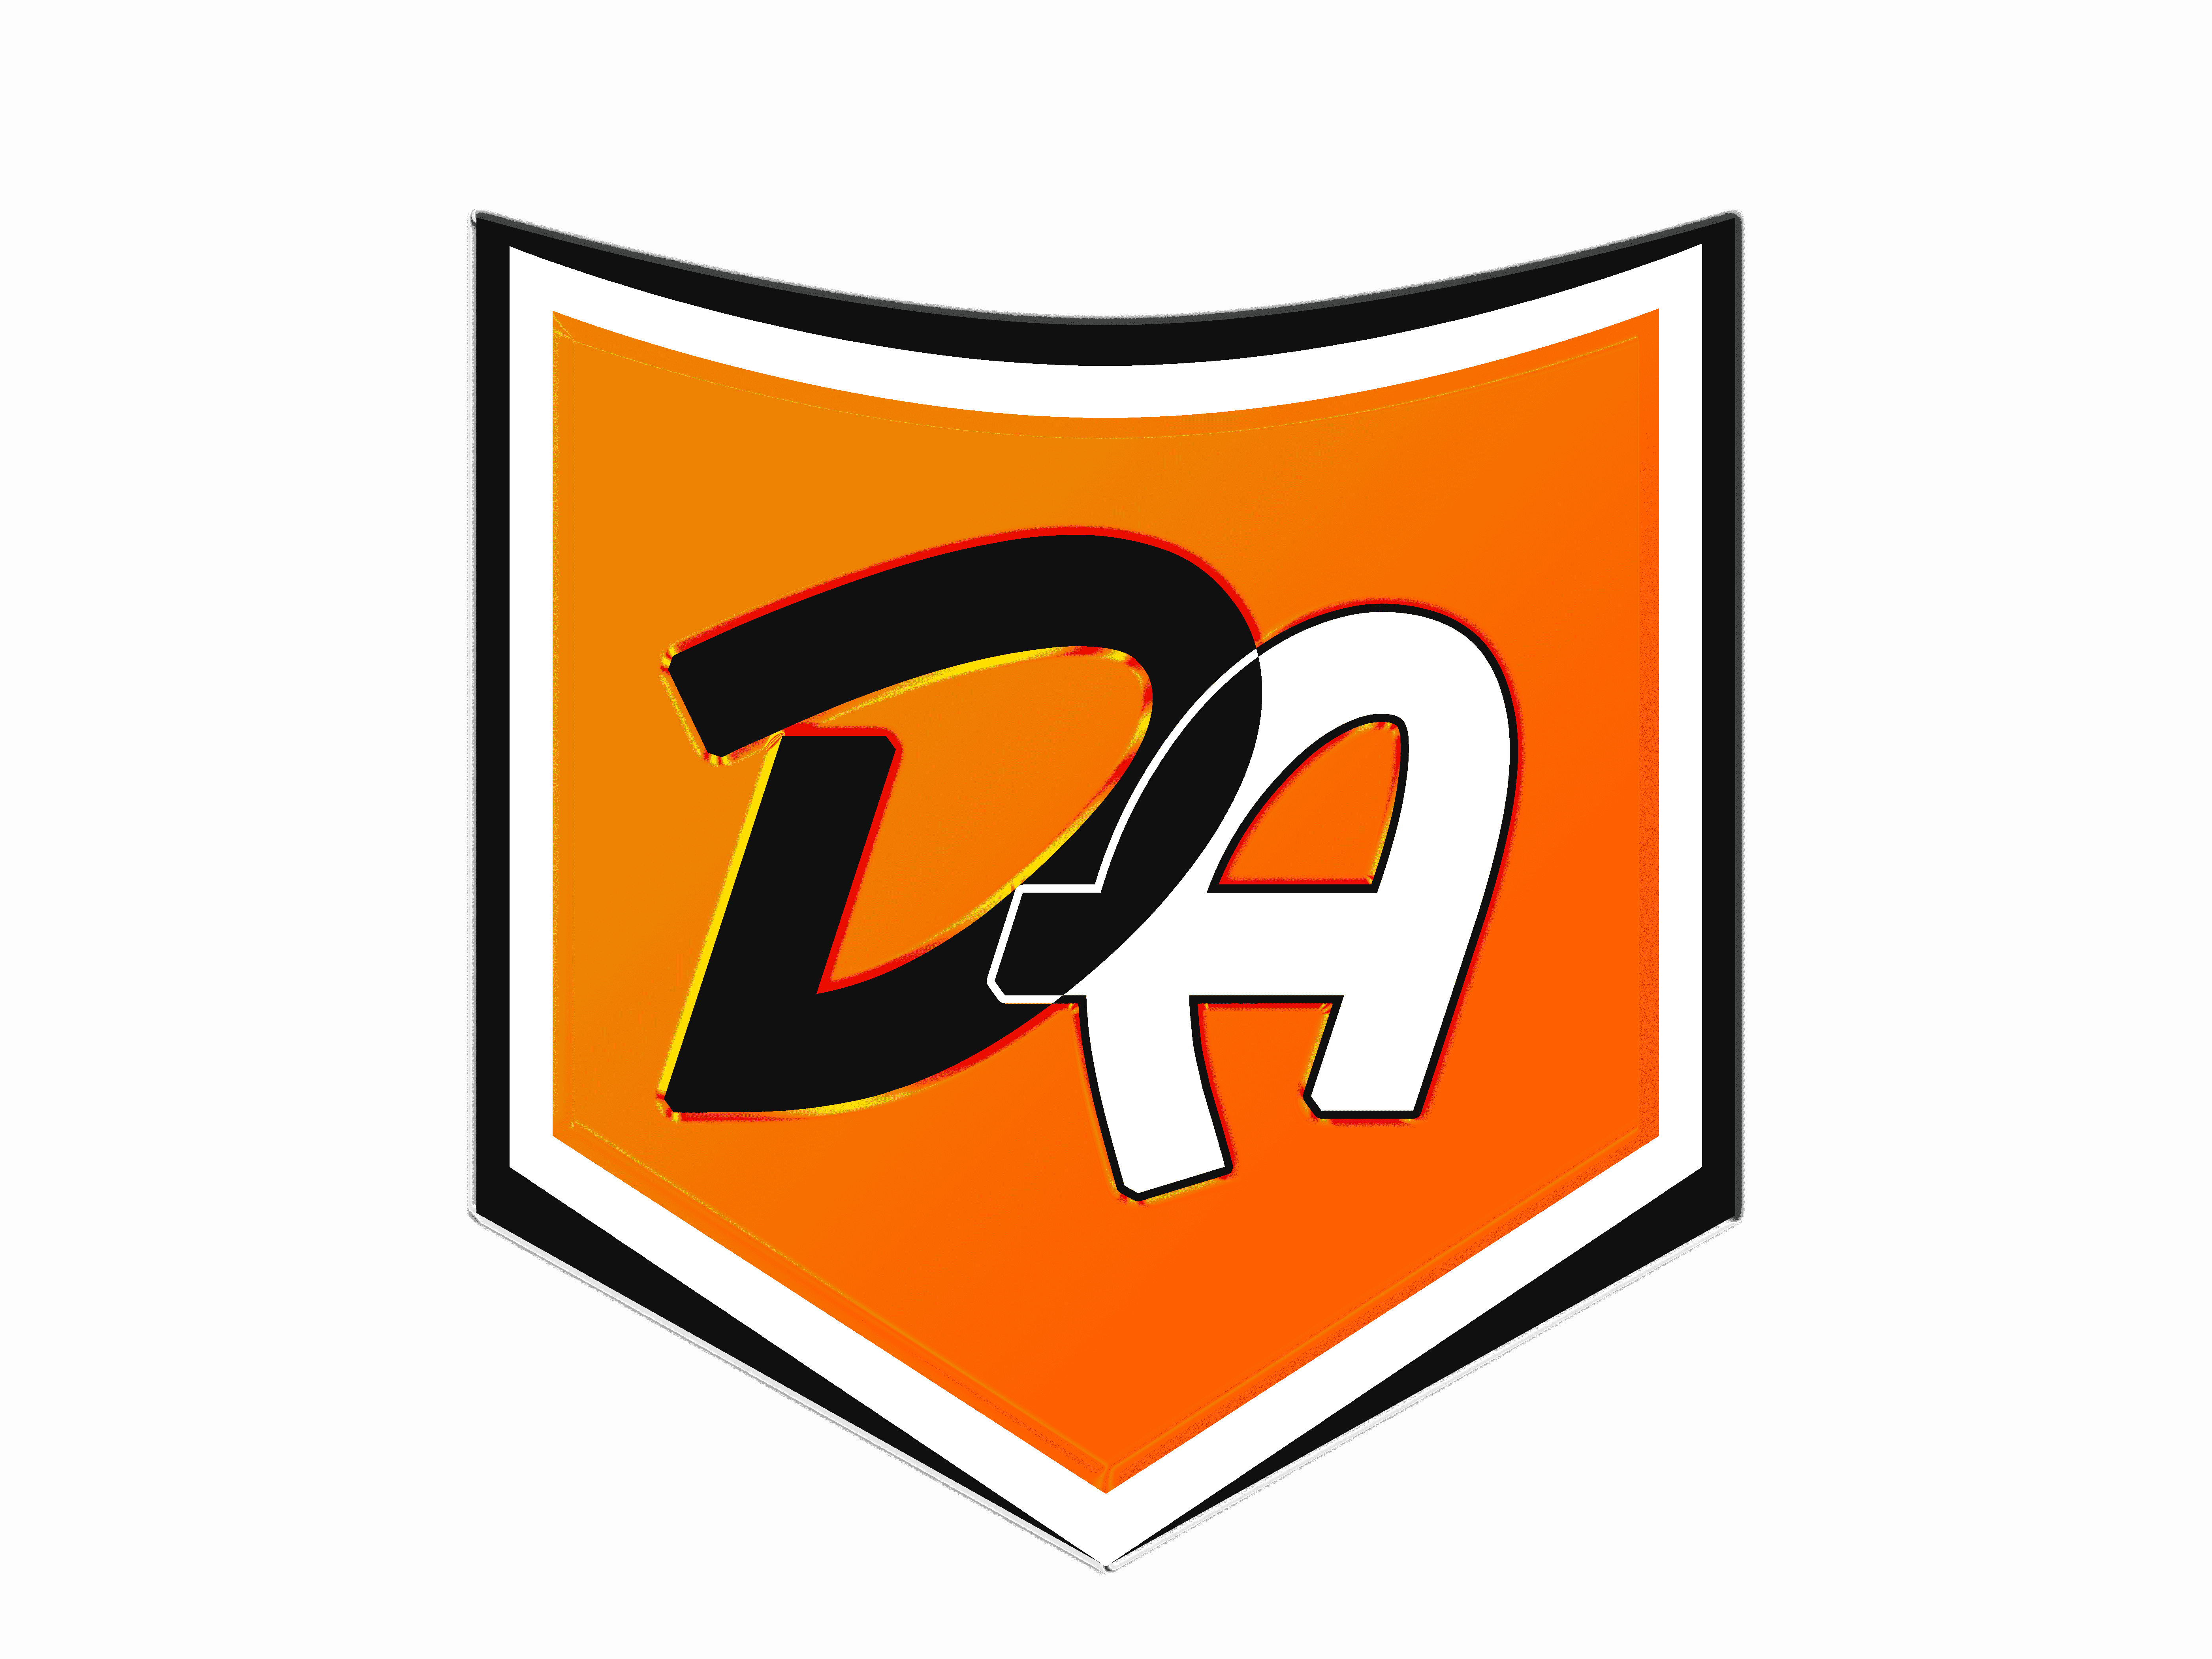 davidayo logo for mobile app development